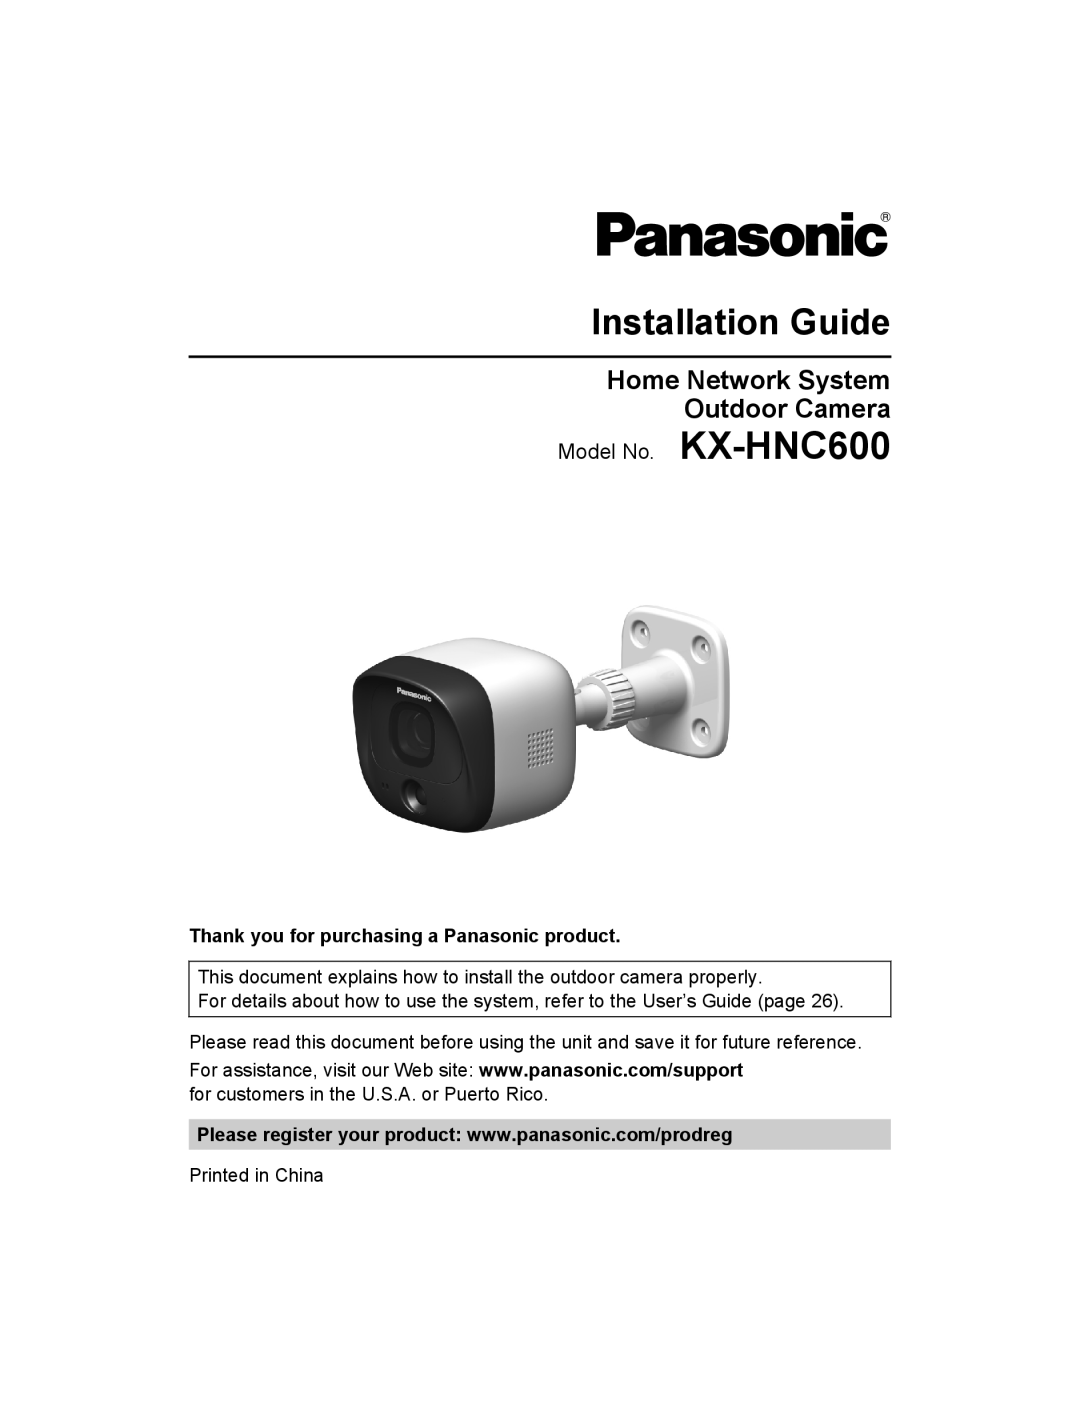 Panasonic manual Home Network System Outdoor Camera, Model No. KX-HNC600, Installation Guide 